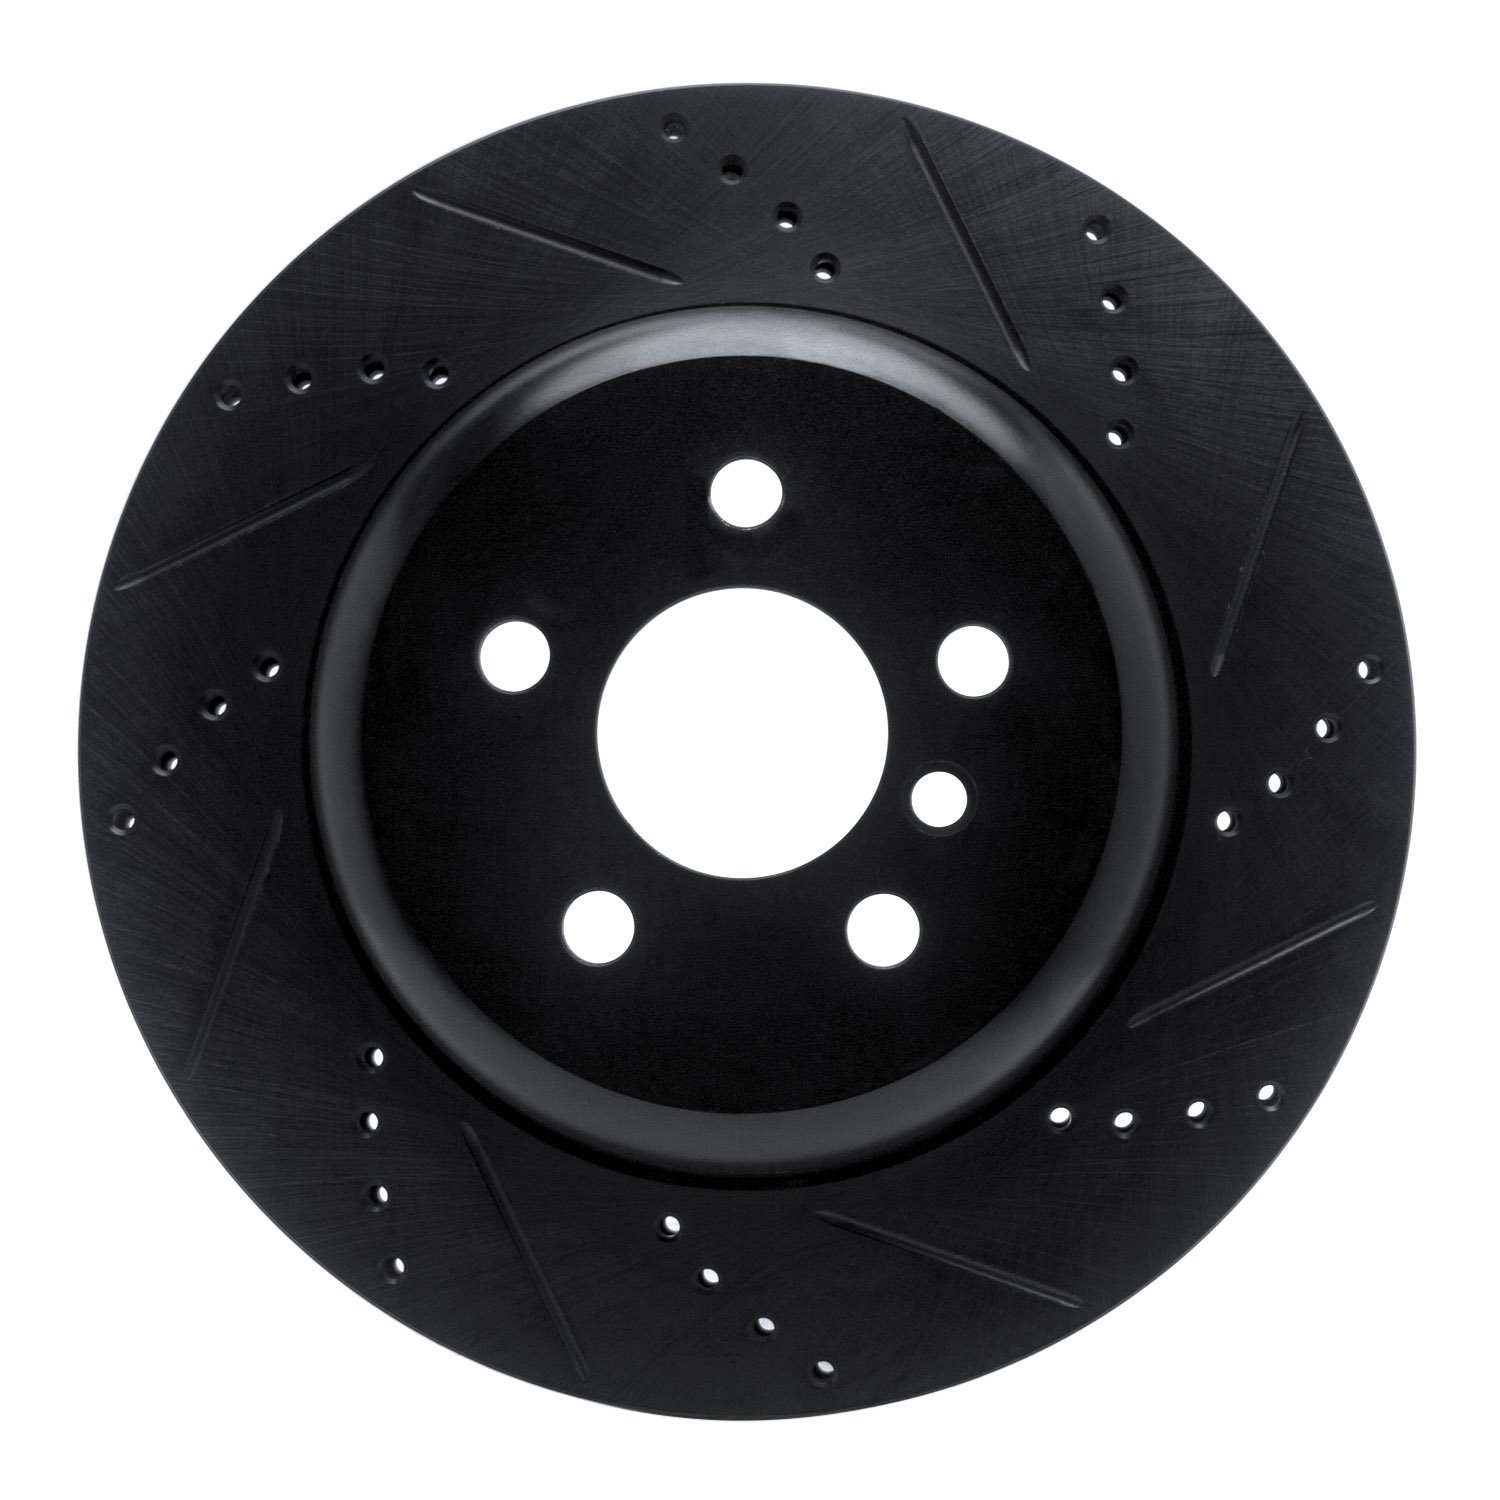 633-31170D Drilled/Slotted Brake Rotor [Black], Fits Select Multiple Makes/Models, Position: Rear Left